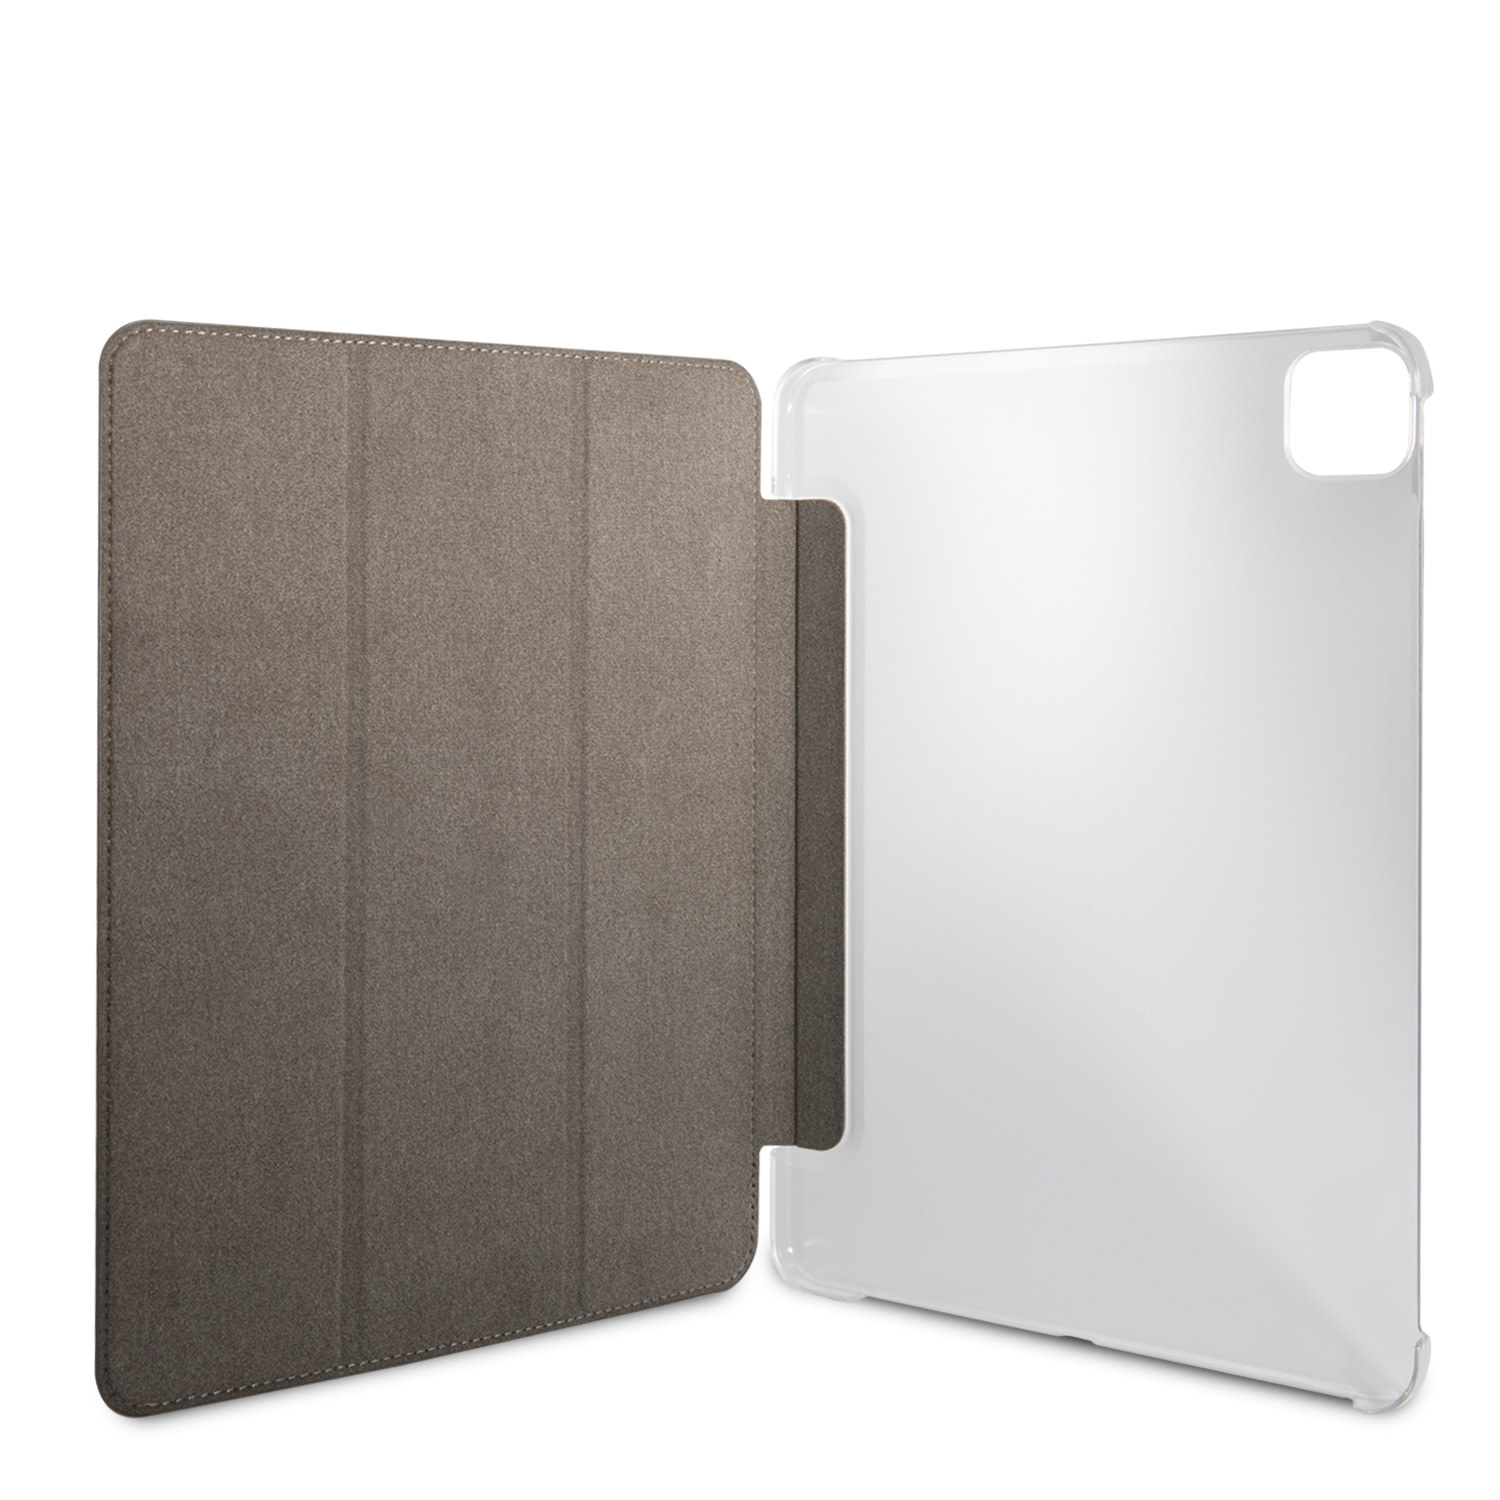 Guess Folio iPad Pro 11 colos (2021) könyvtok- Szü